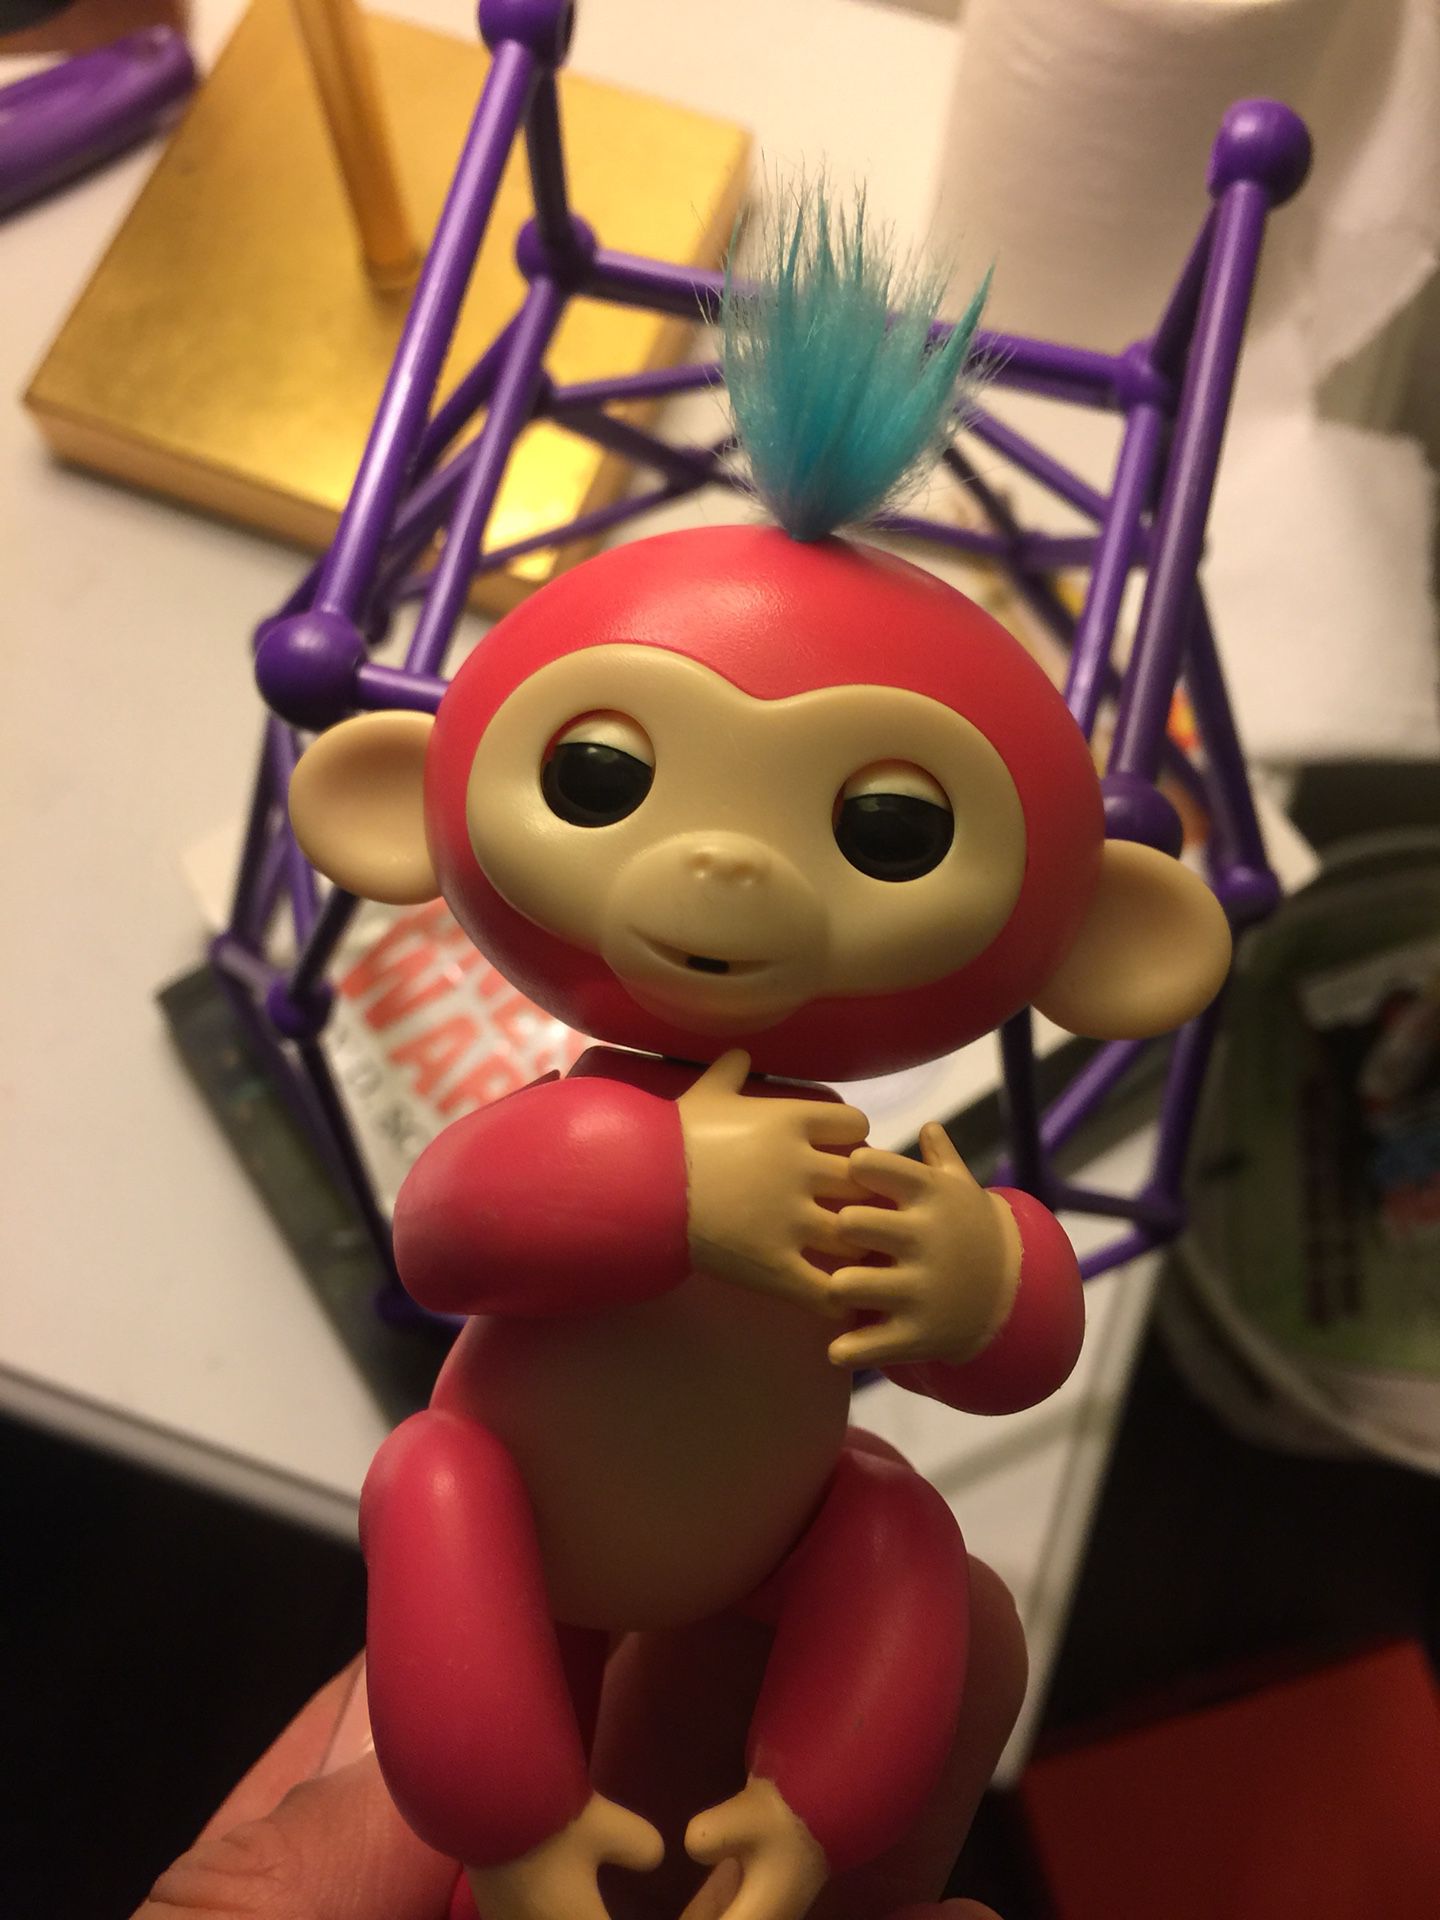 Fingerling Interactive Monkey with Monkey bars